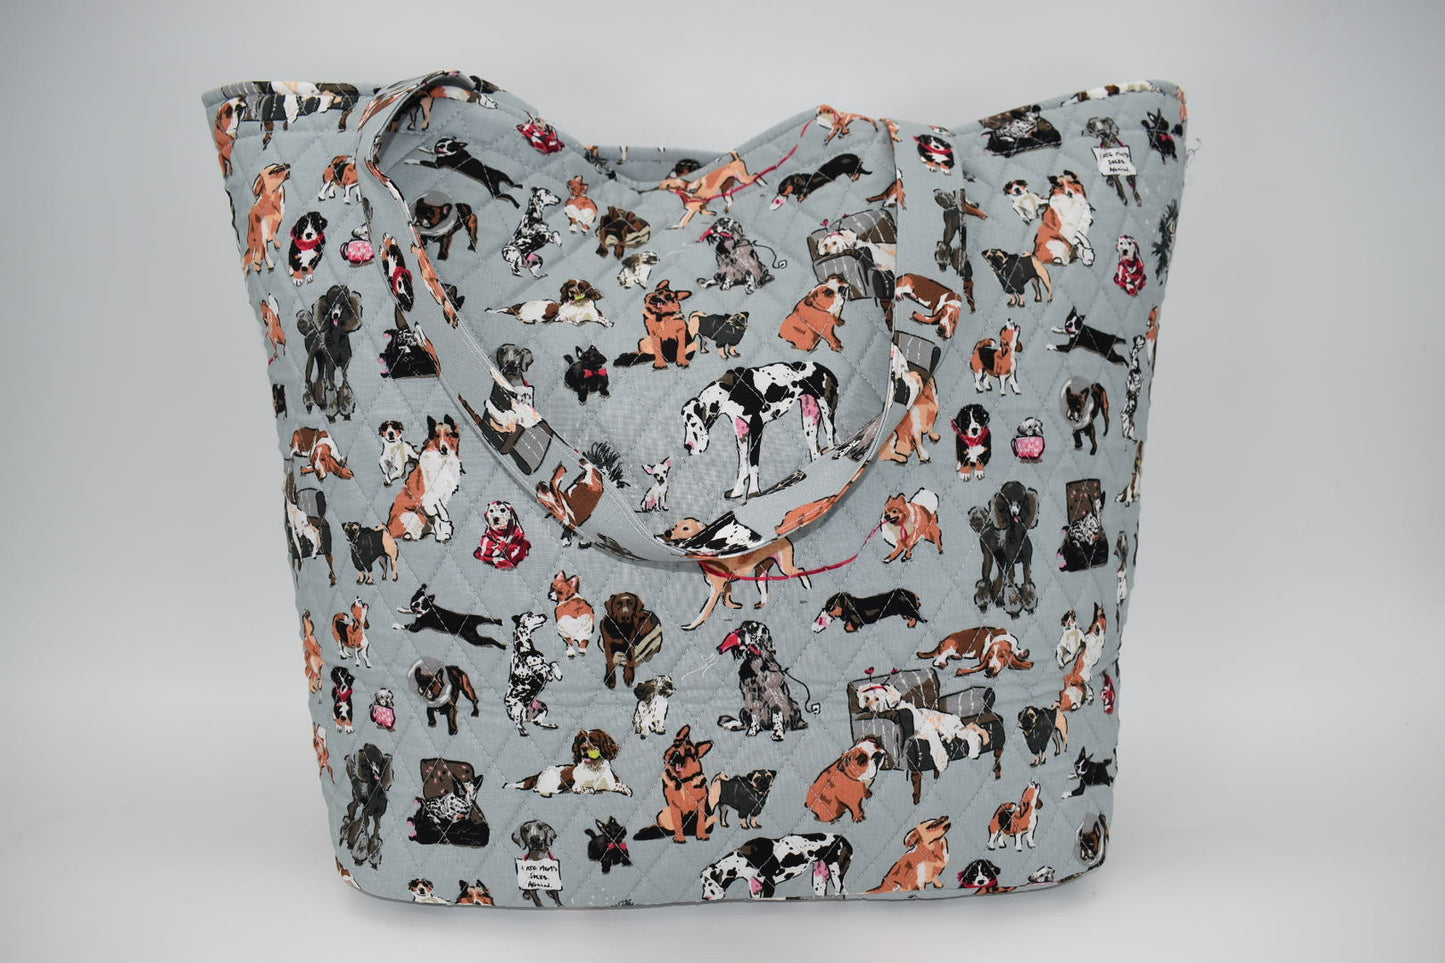 Vera Bradley Grand Tote Bag in "Dog Show" Pattern